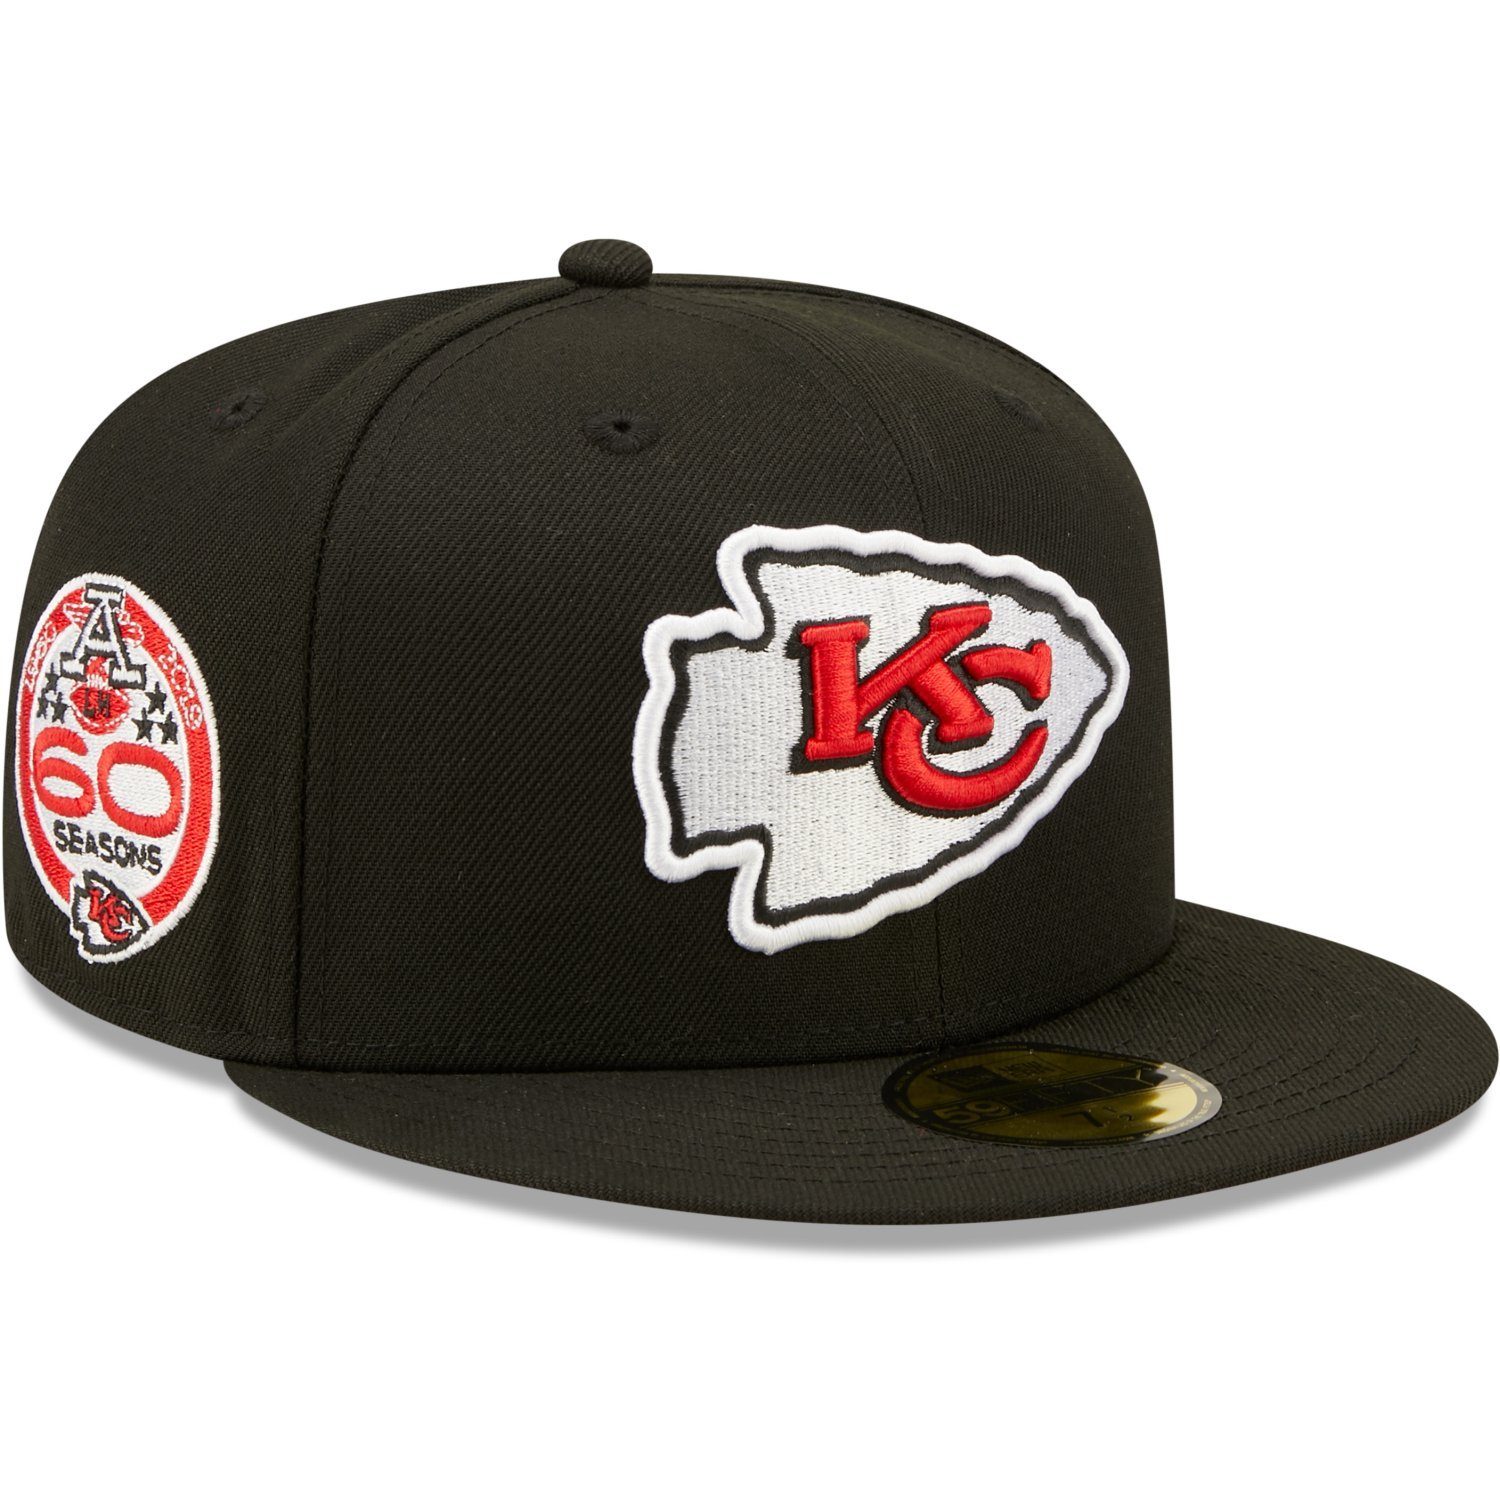 New Era Fitted Cap 59Fifty Kansas City Chiefs 60 Seasons